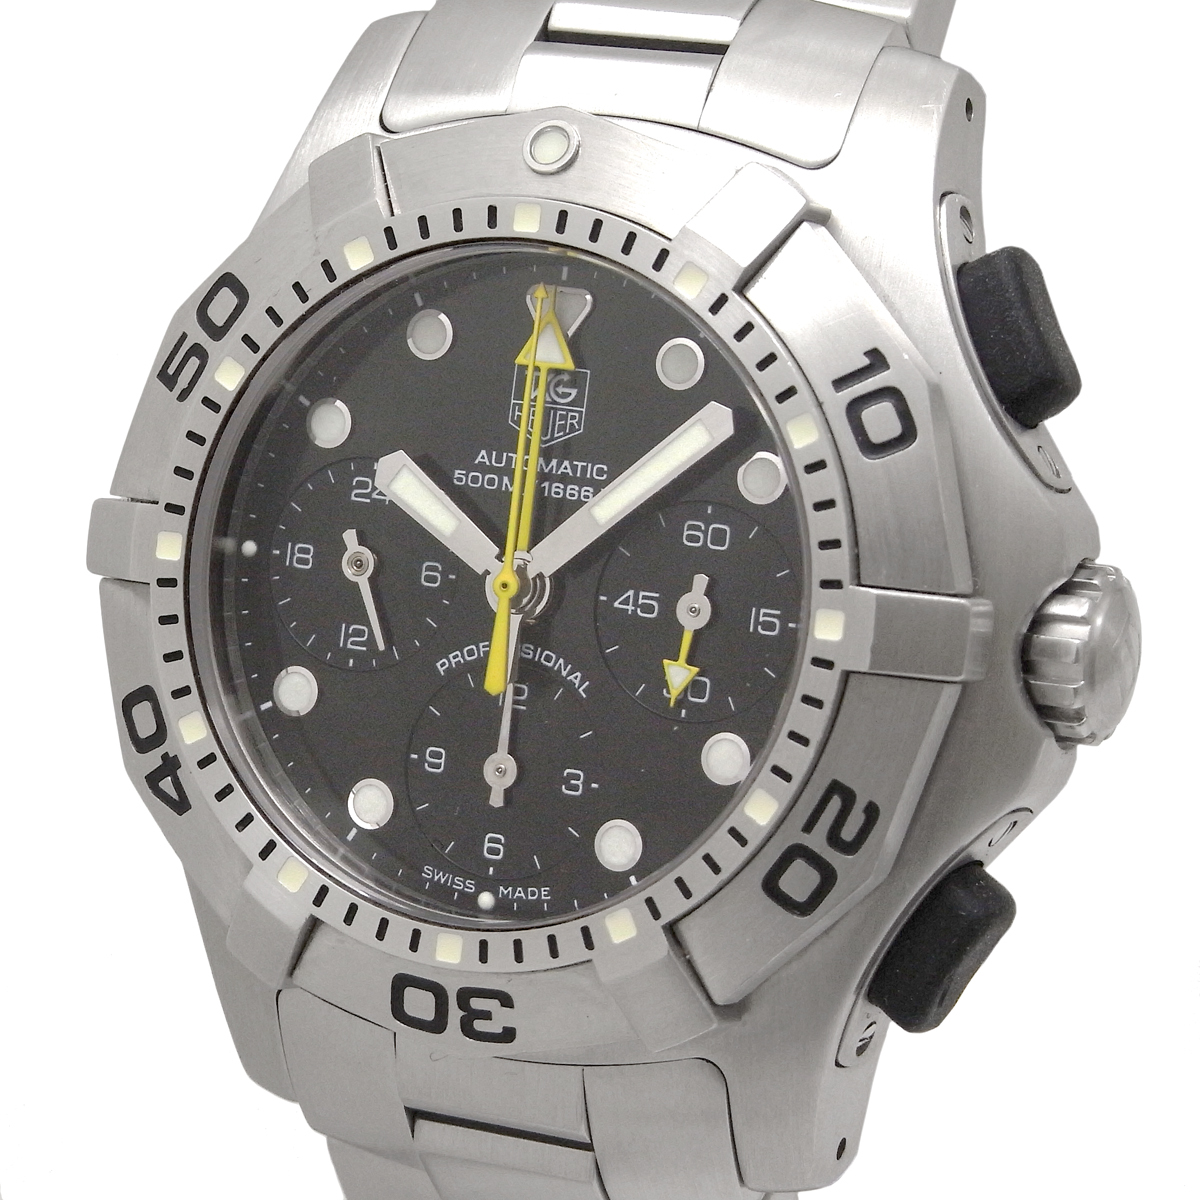  TAG Heuer 2000 aqua graph men's self-winding watch AT chronograph black face CN211A.BA0353 TAGHEUER